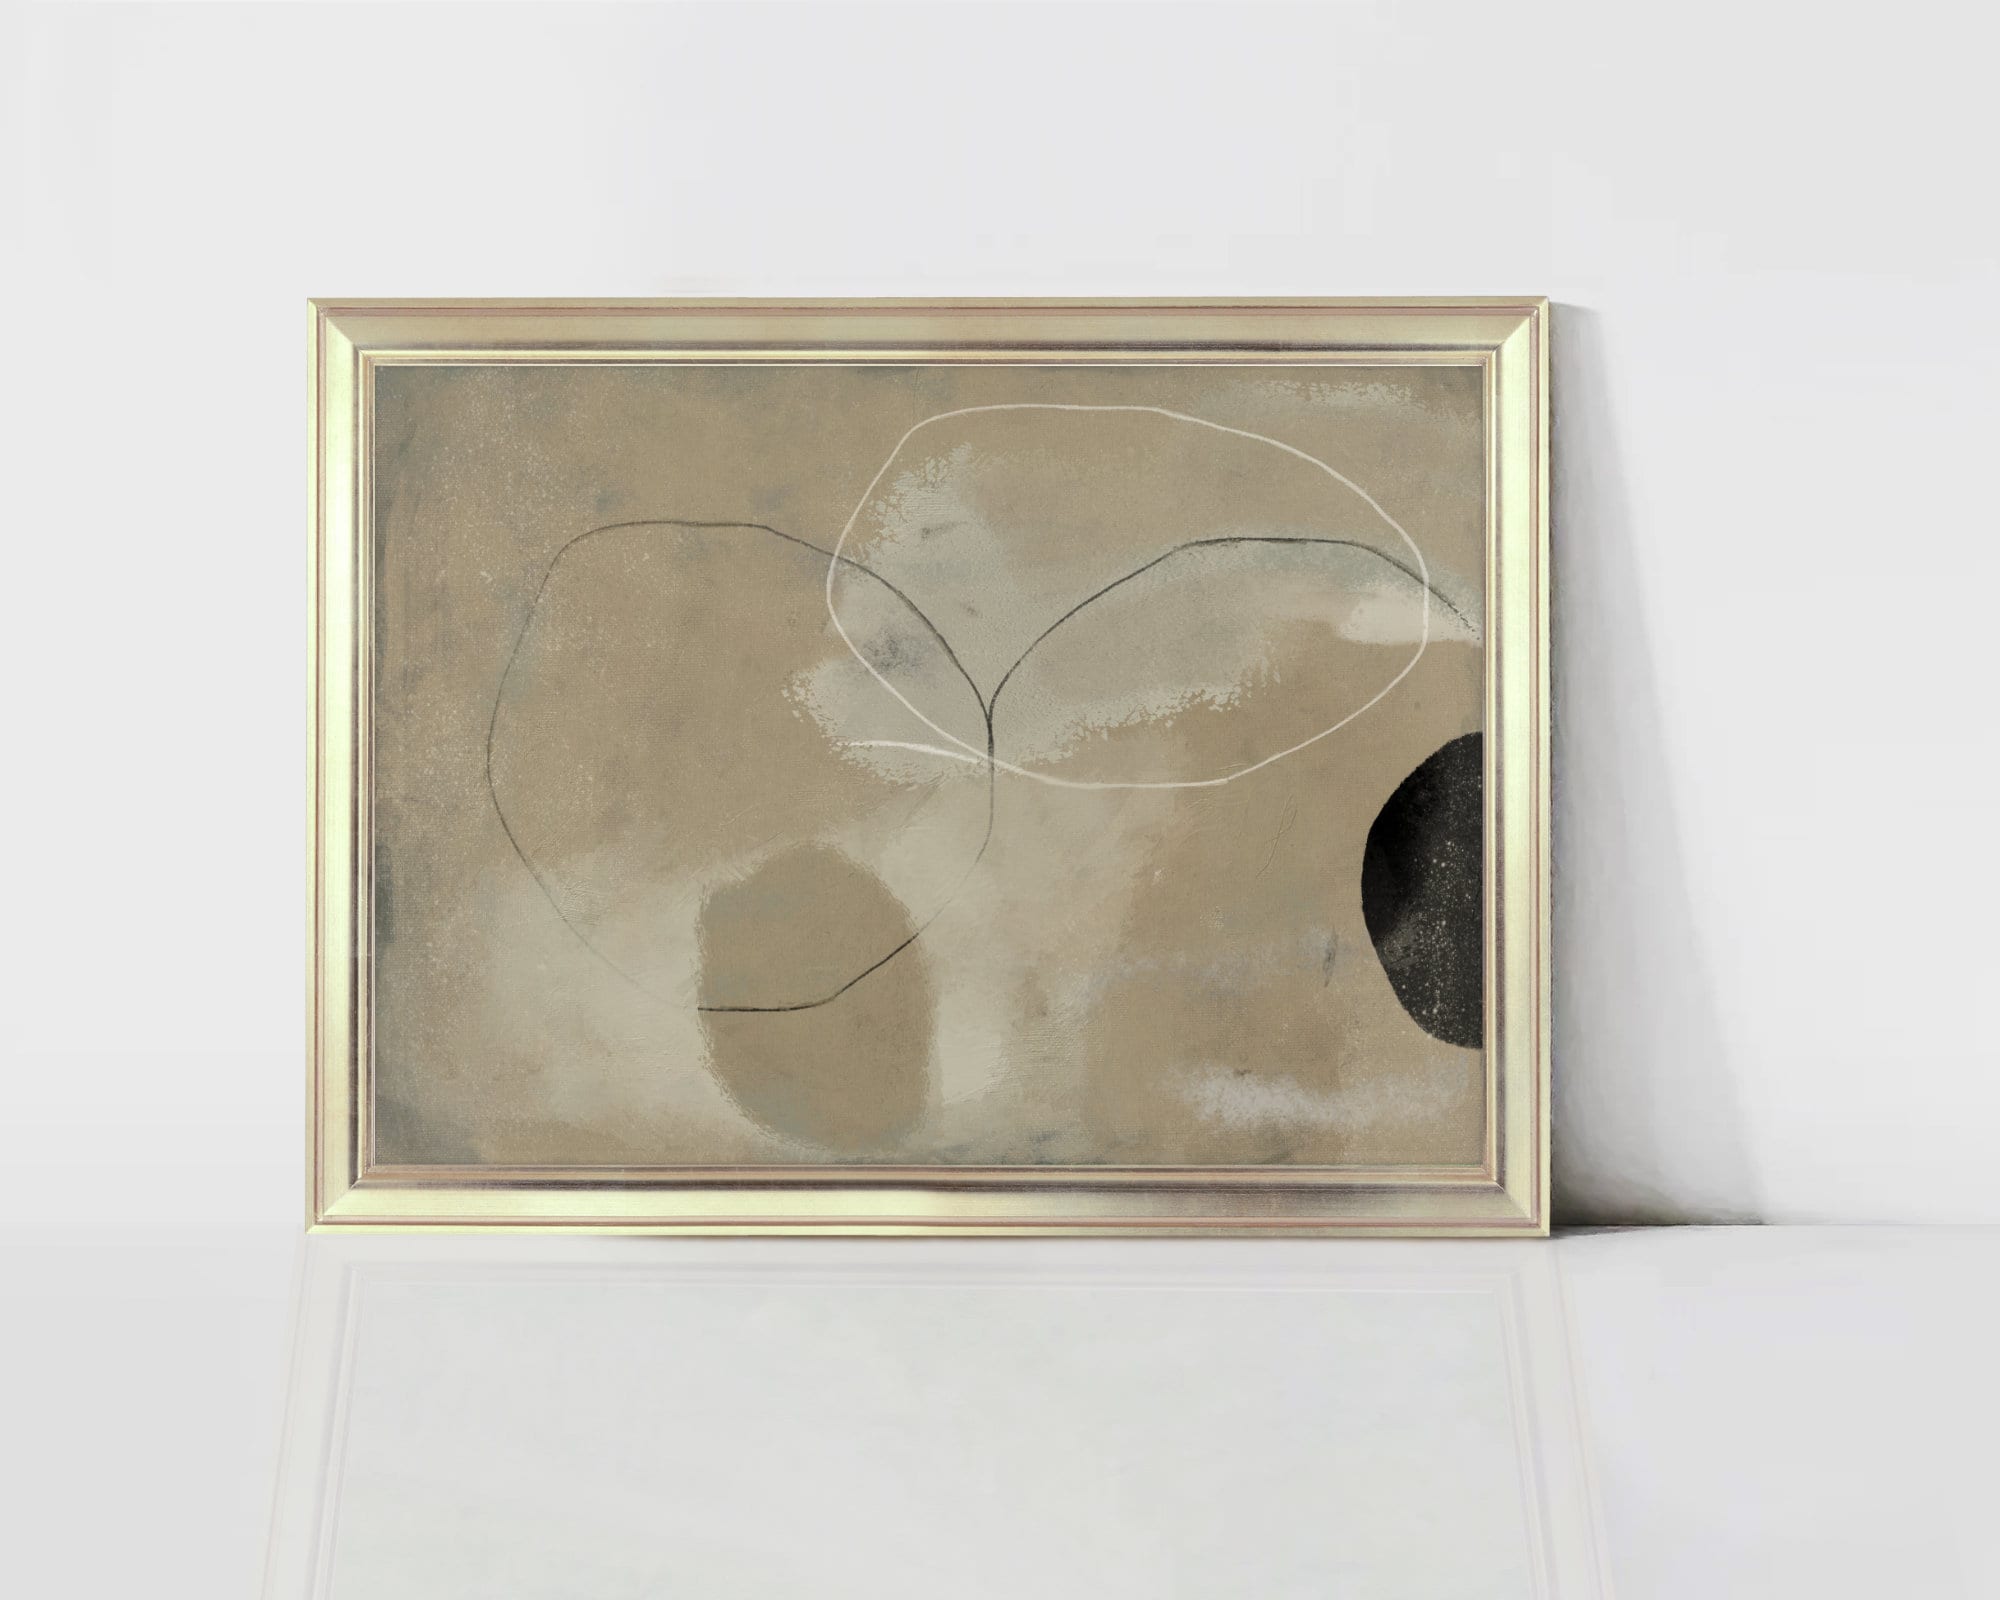 Circles and lines scandinavian wallart minimalist apartment decor, Abstract painting Digital download